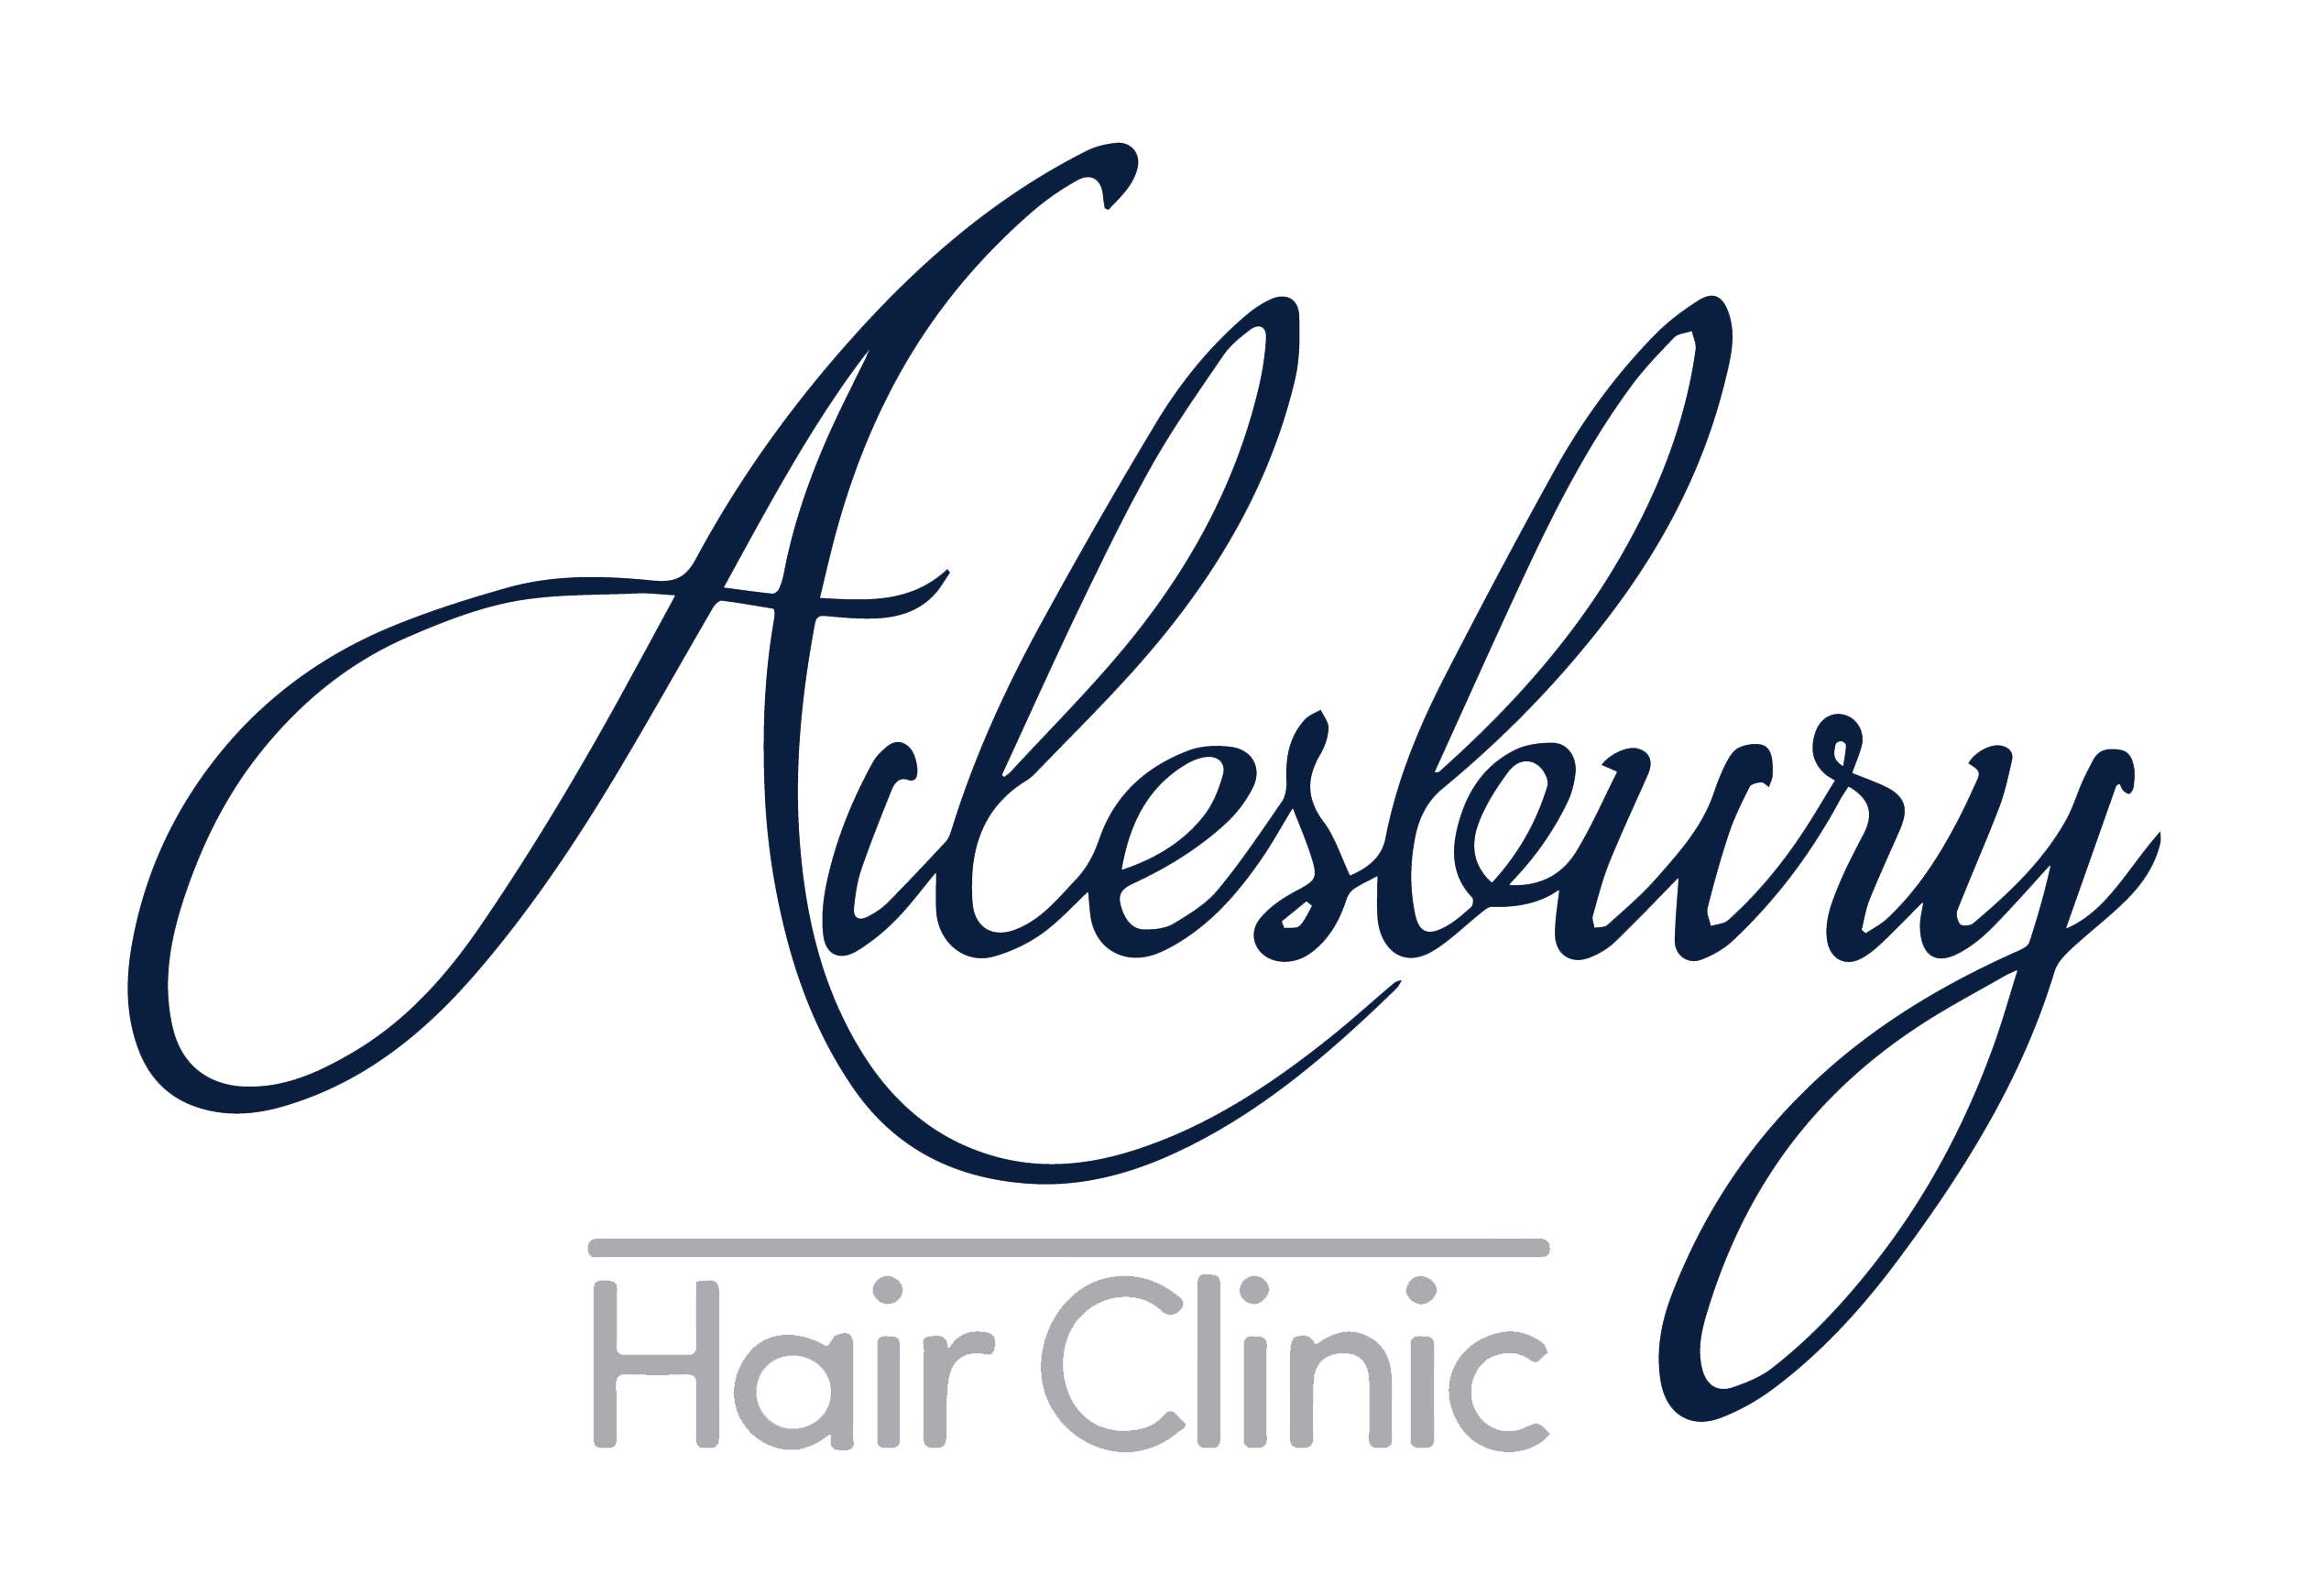 Aylesbury Clinic Hair micropigmentation logo